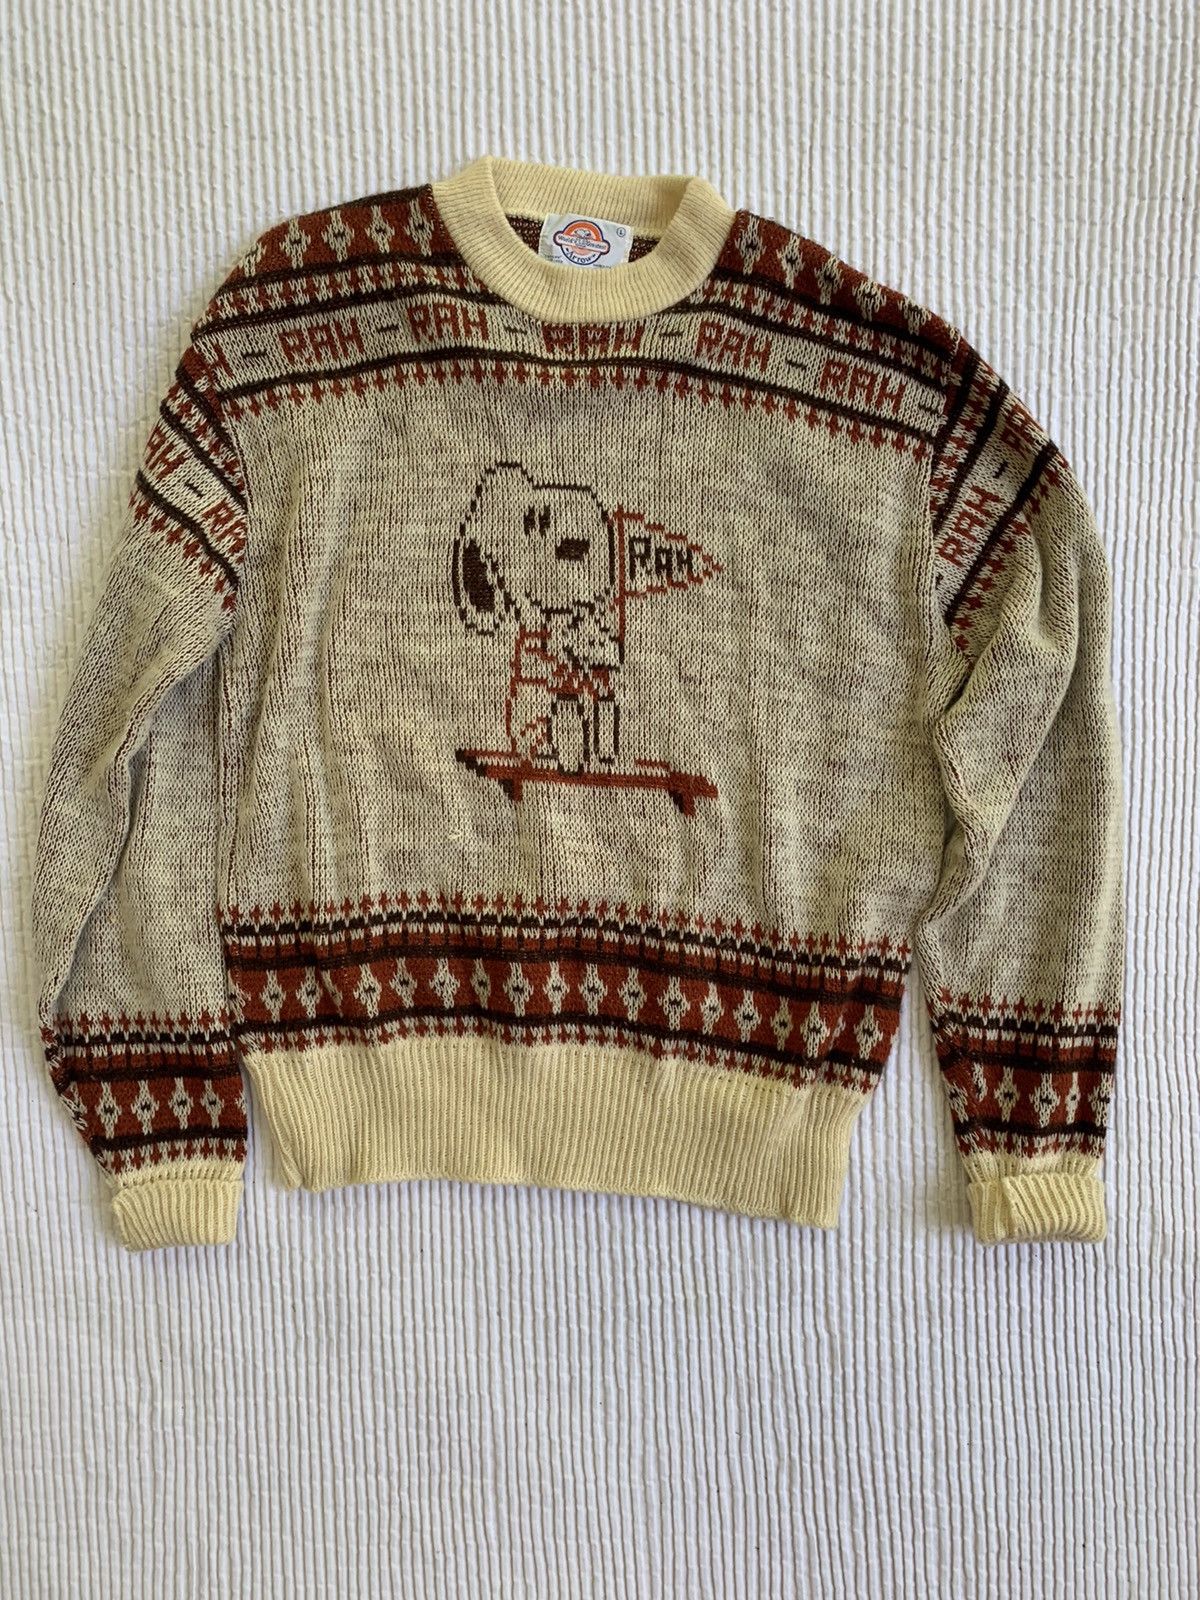 Vintage Vintage Snoopy Knit Wool Sweater Rah Arrow 50s 60s 70s idk